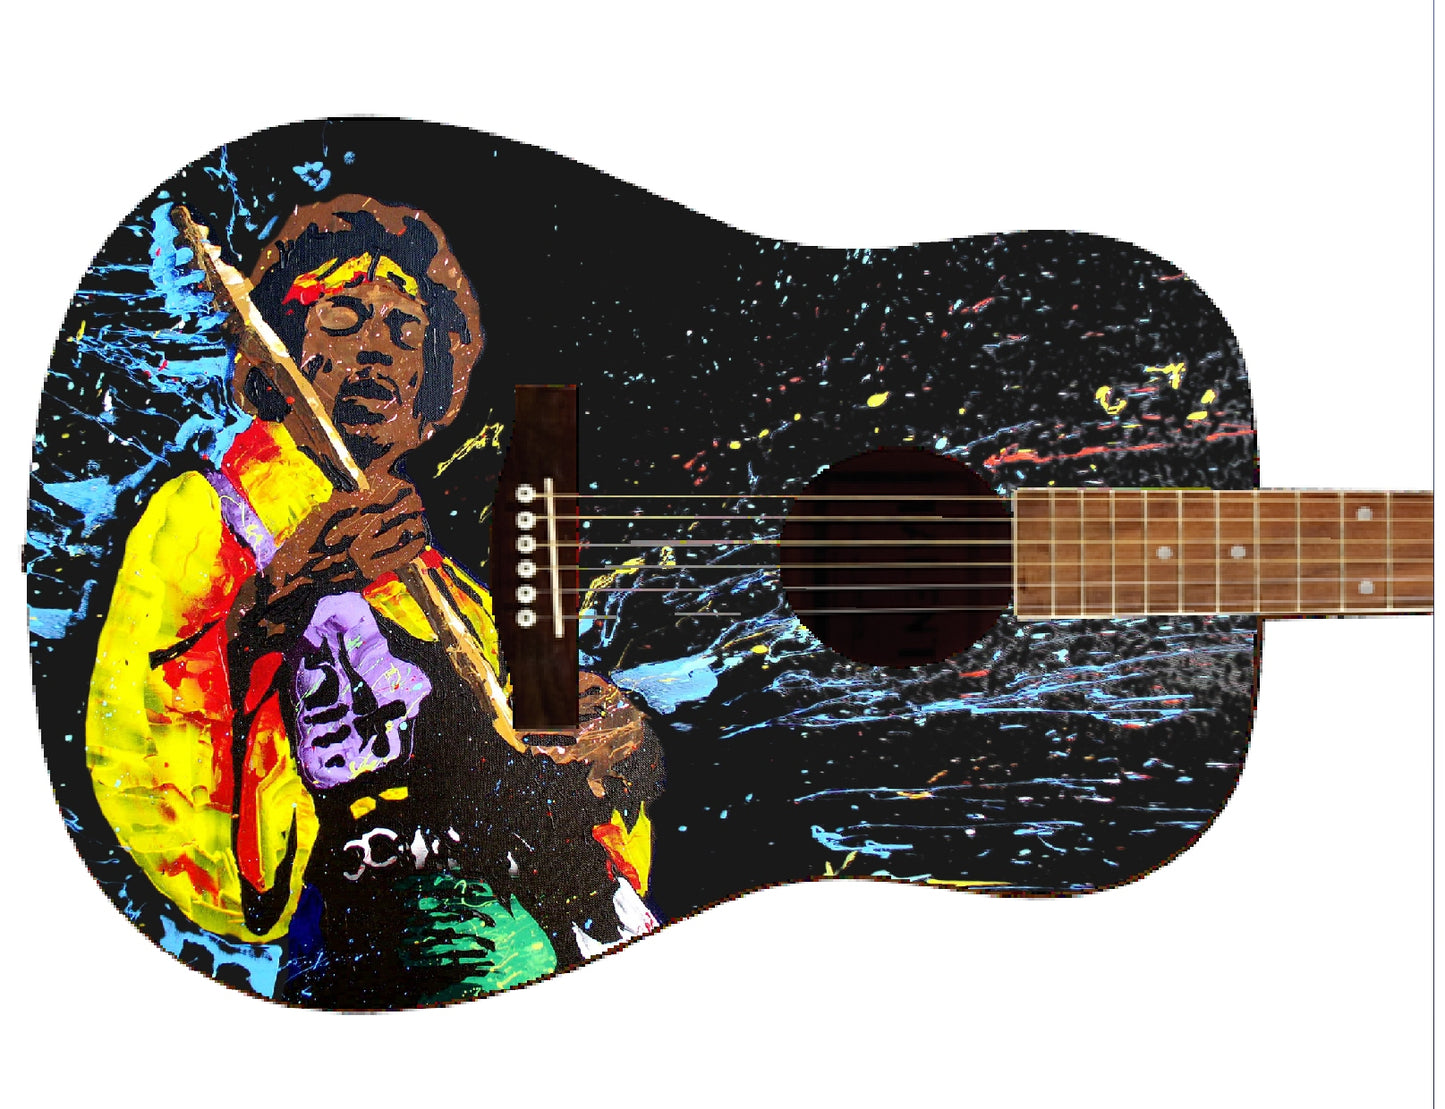 Jimi Hendrix Custom Guitar - Zion Graphic Collectibles